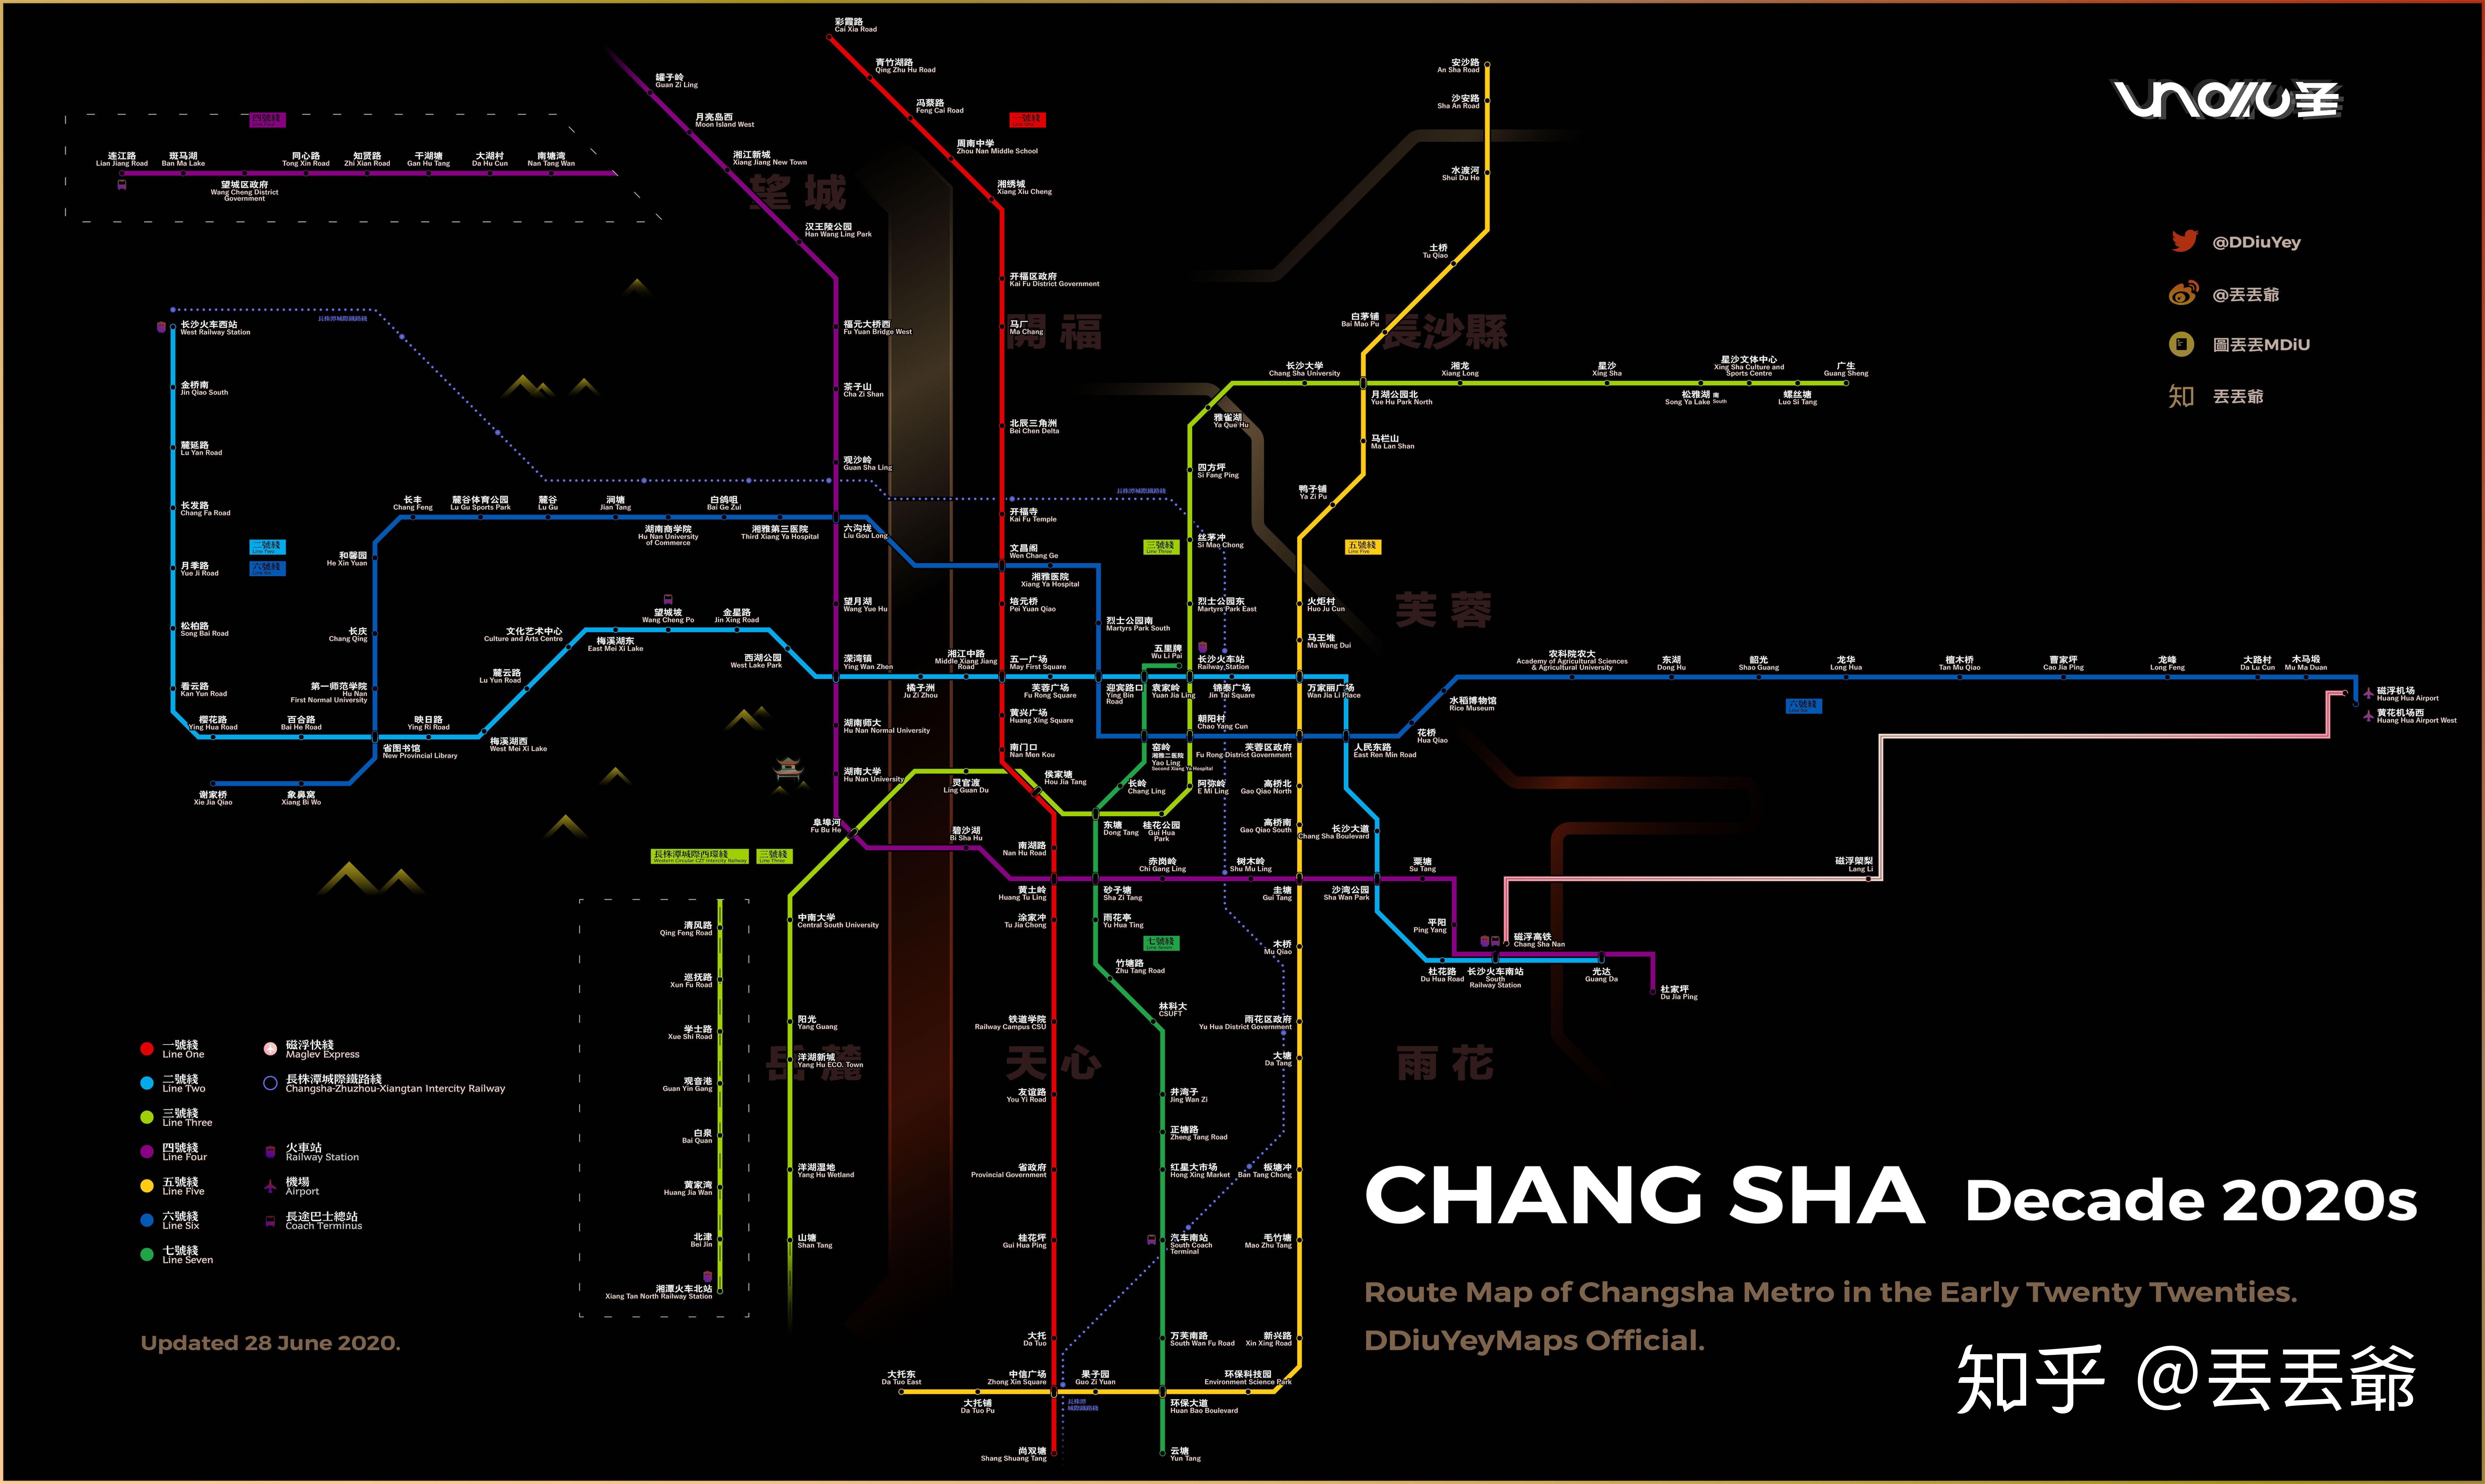 changsha metro decade 2020s二〇二〇年代及以后长沙地铁路线图